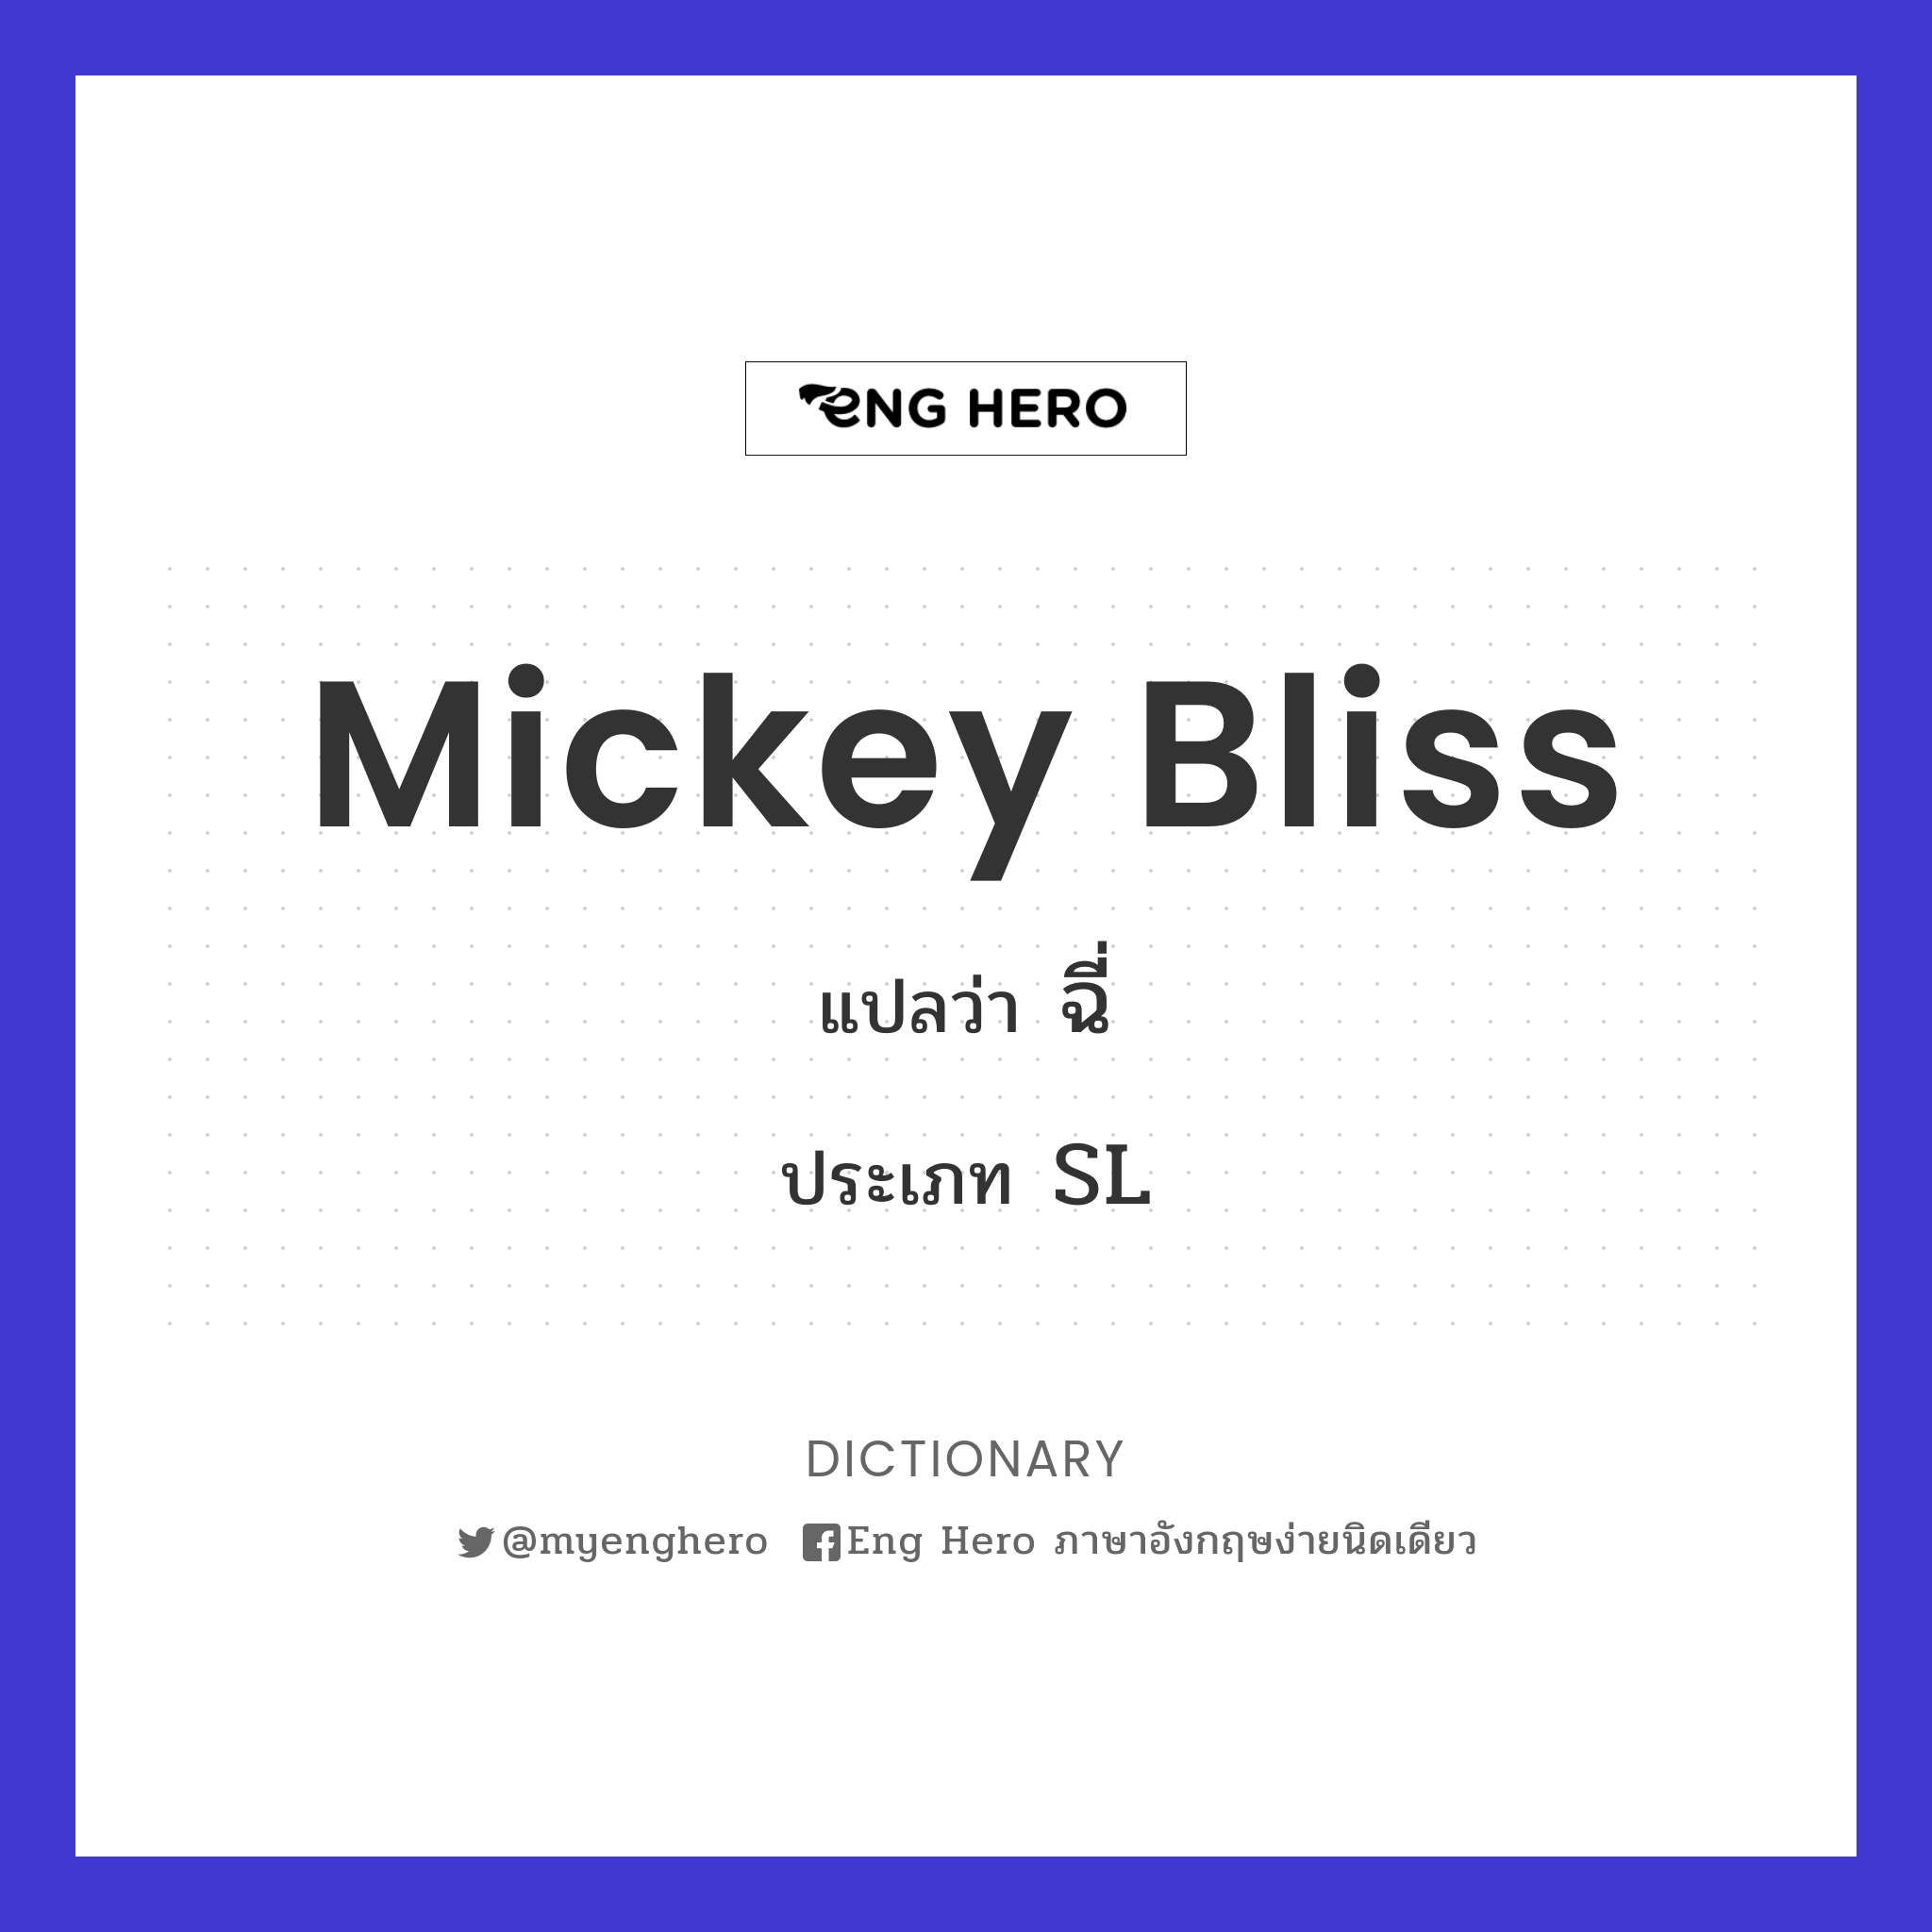 Mickey Bliss